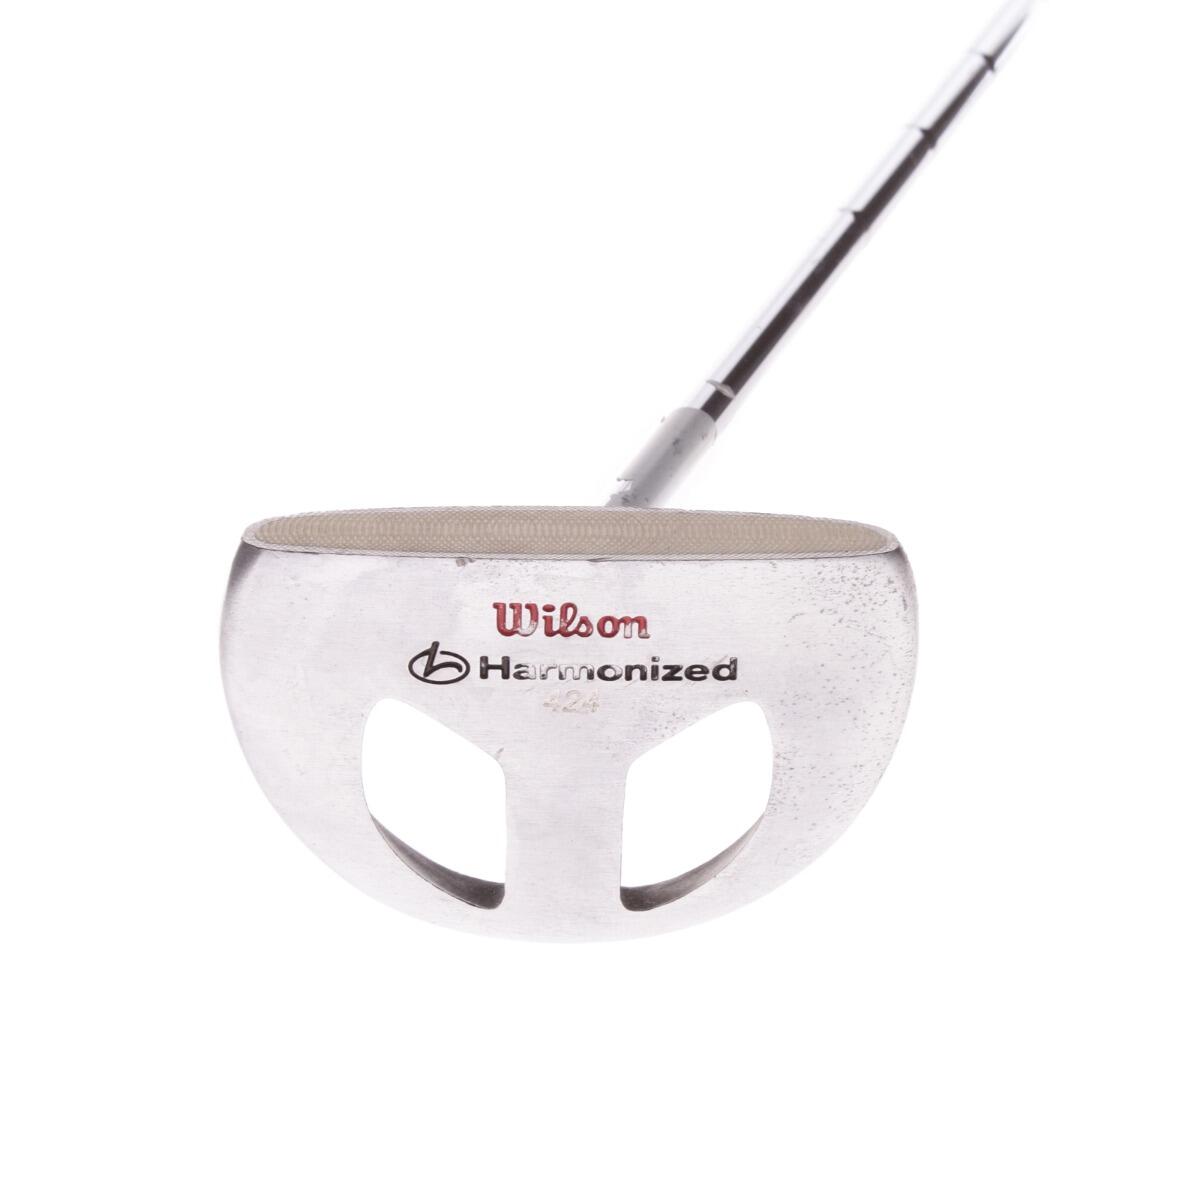 WILSON USED - Wilson Harmonised 424 Putter 35" Length Steel Shaft Right Hand - GRADE D